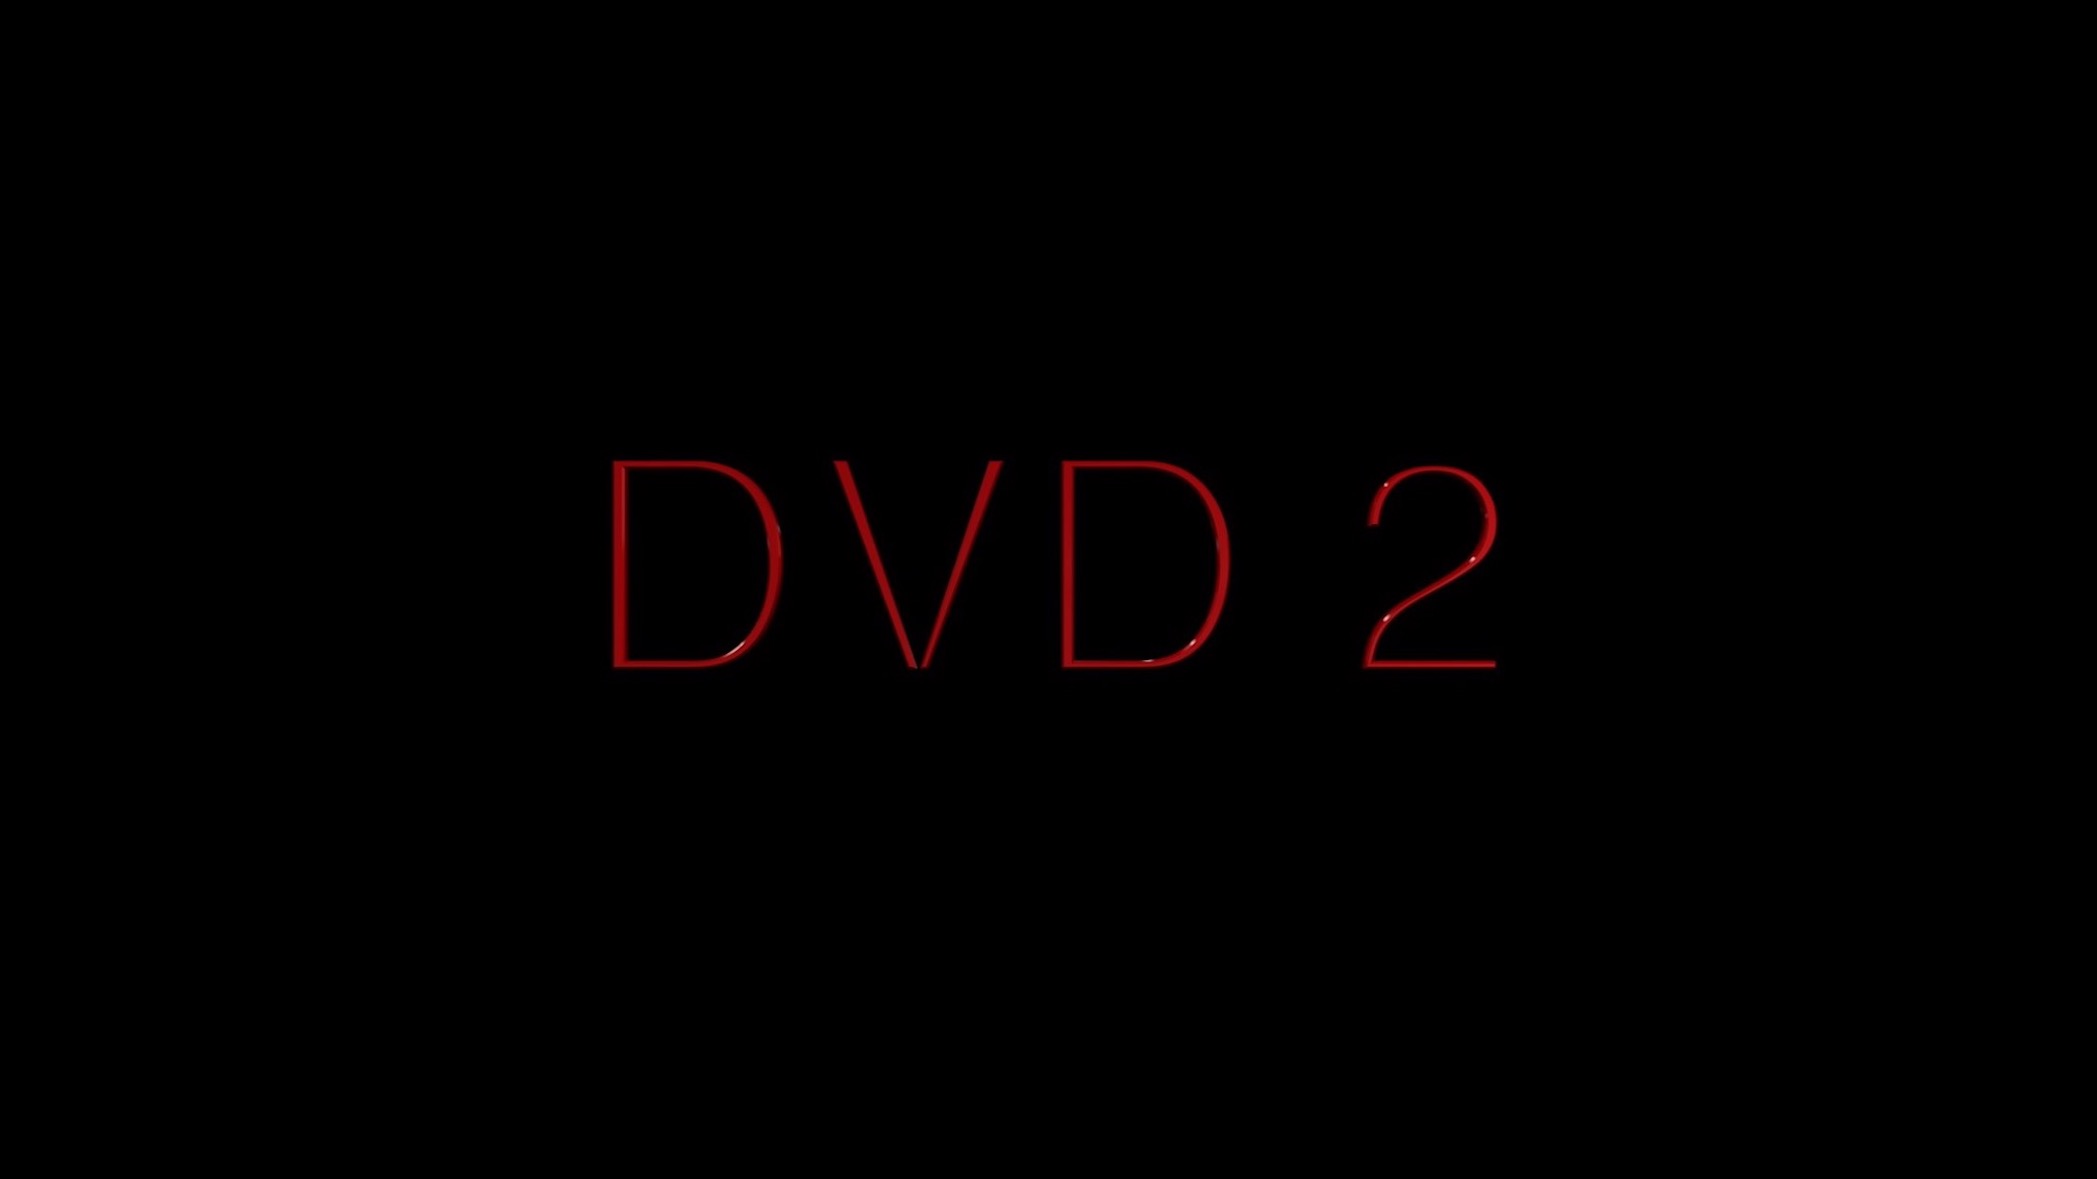 DVD 2 (2019)